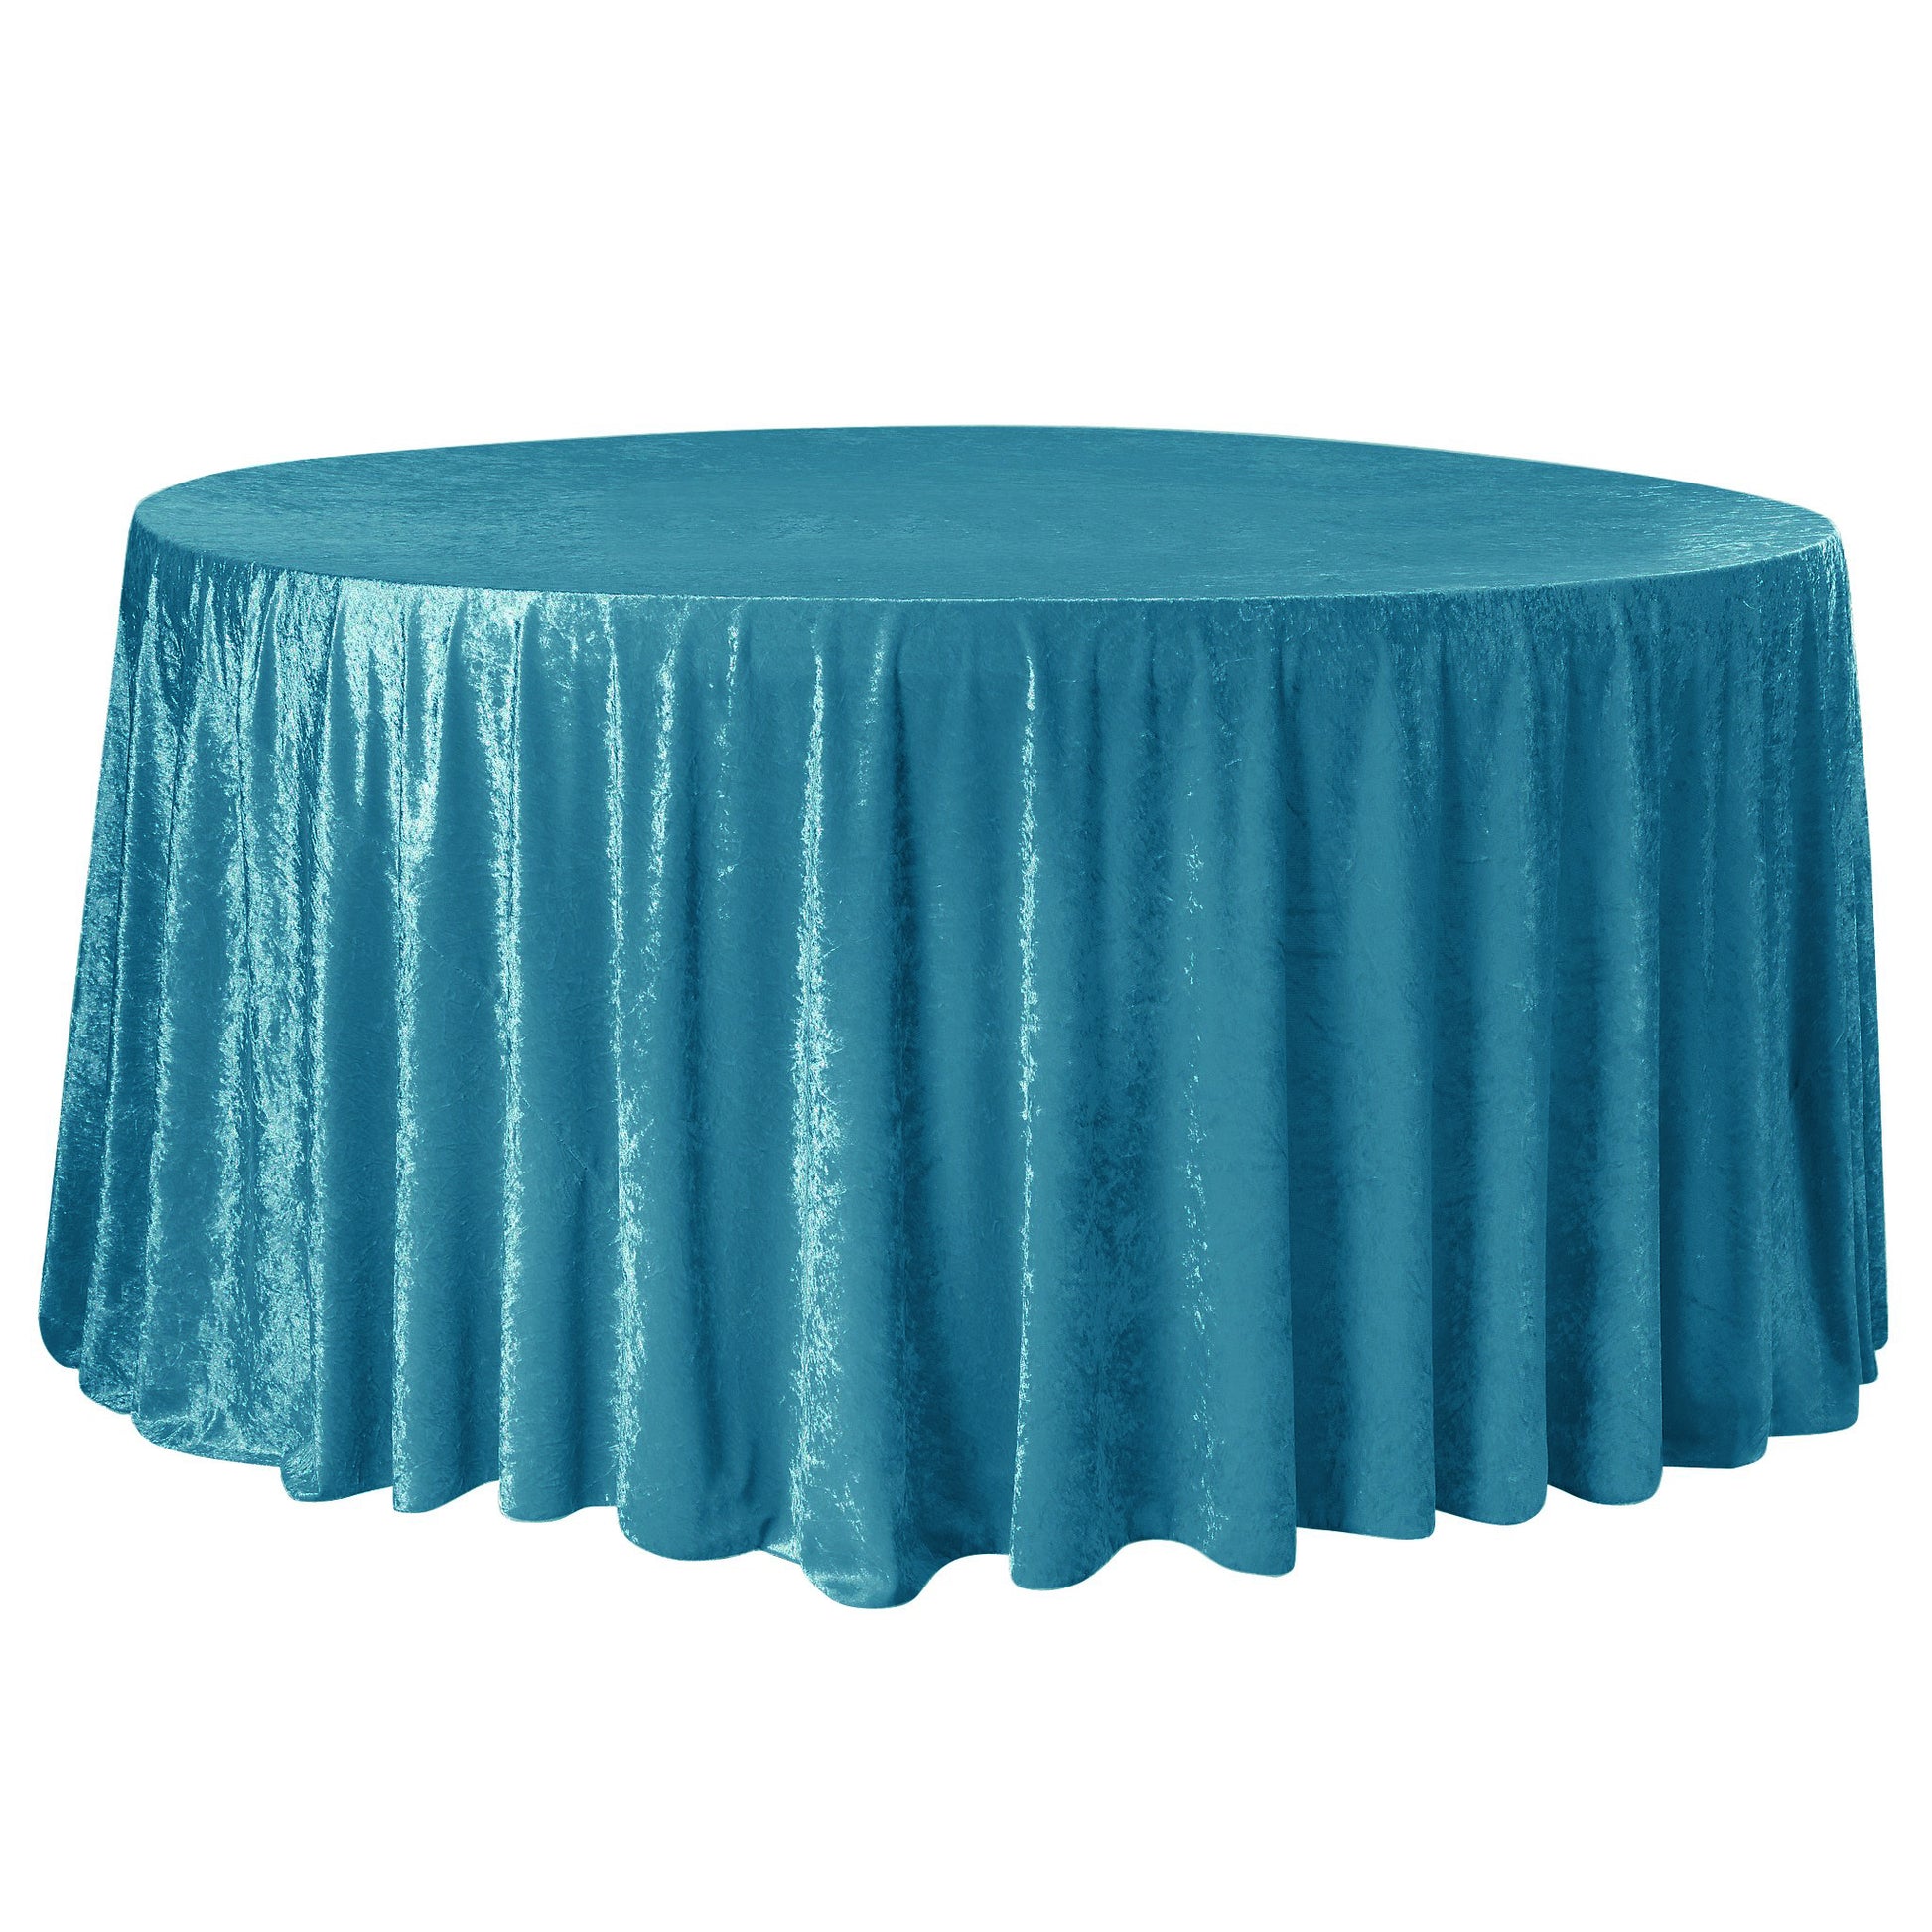 Velvet 120" Round Tablecloth - Peacock Teal - CV Linens